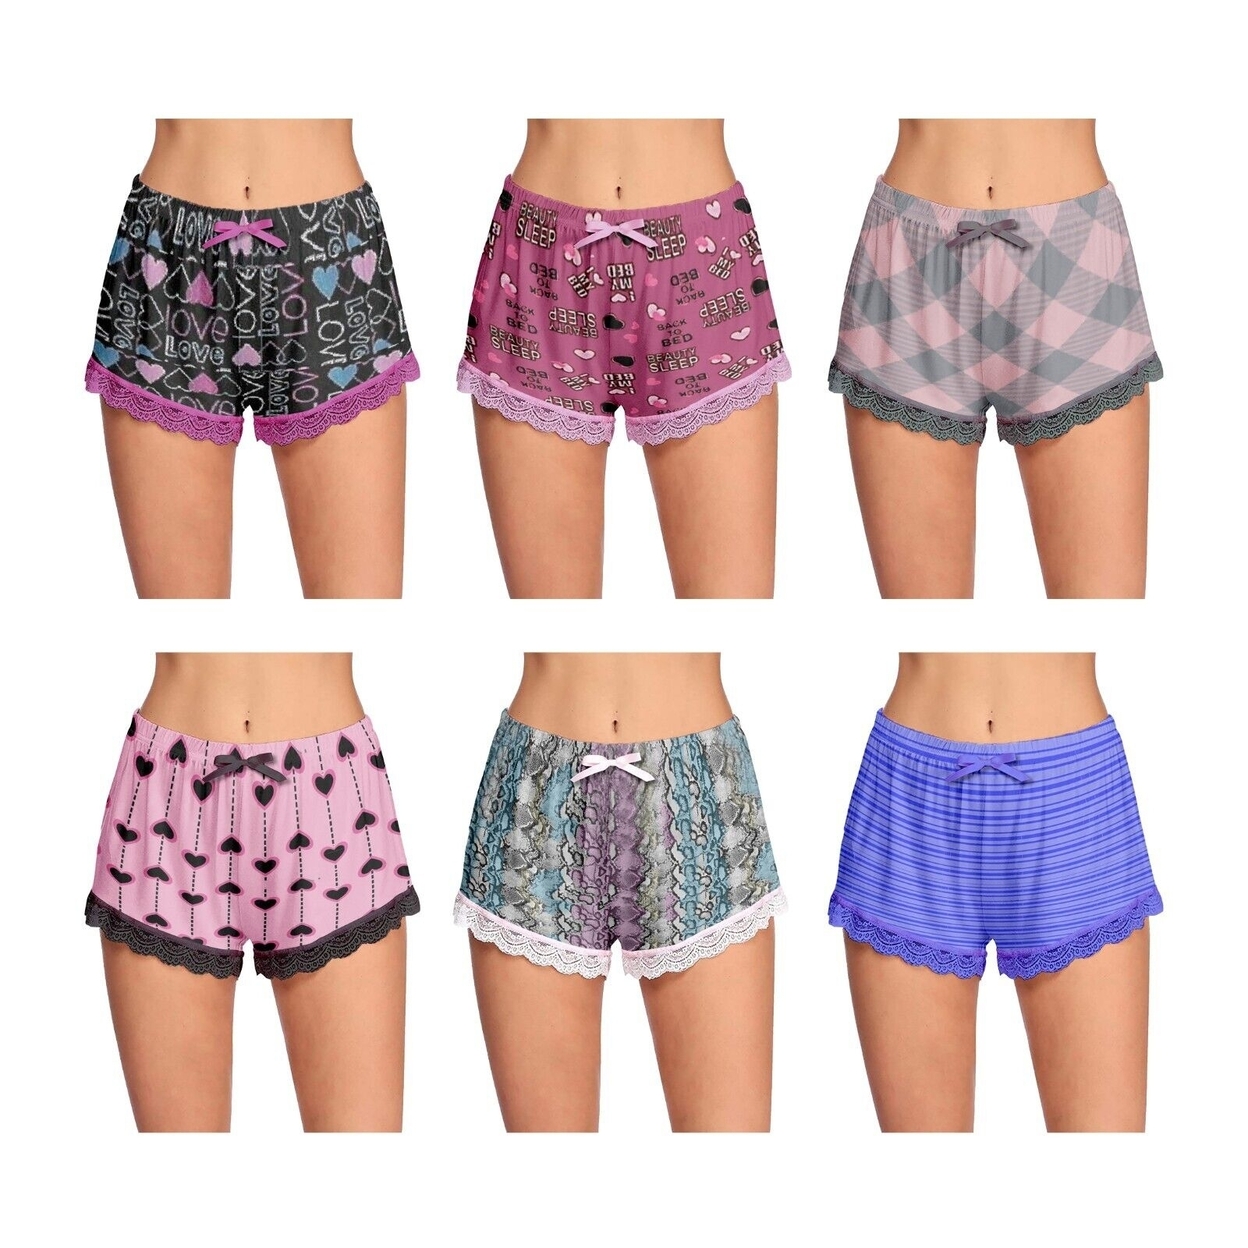 4-Pack: Women's Ultra-Soft Cozy Fun Printed Lace Trim Pajama Lounge Shorts - X-large, Love